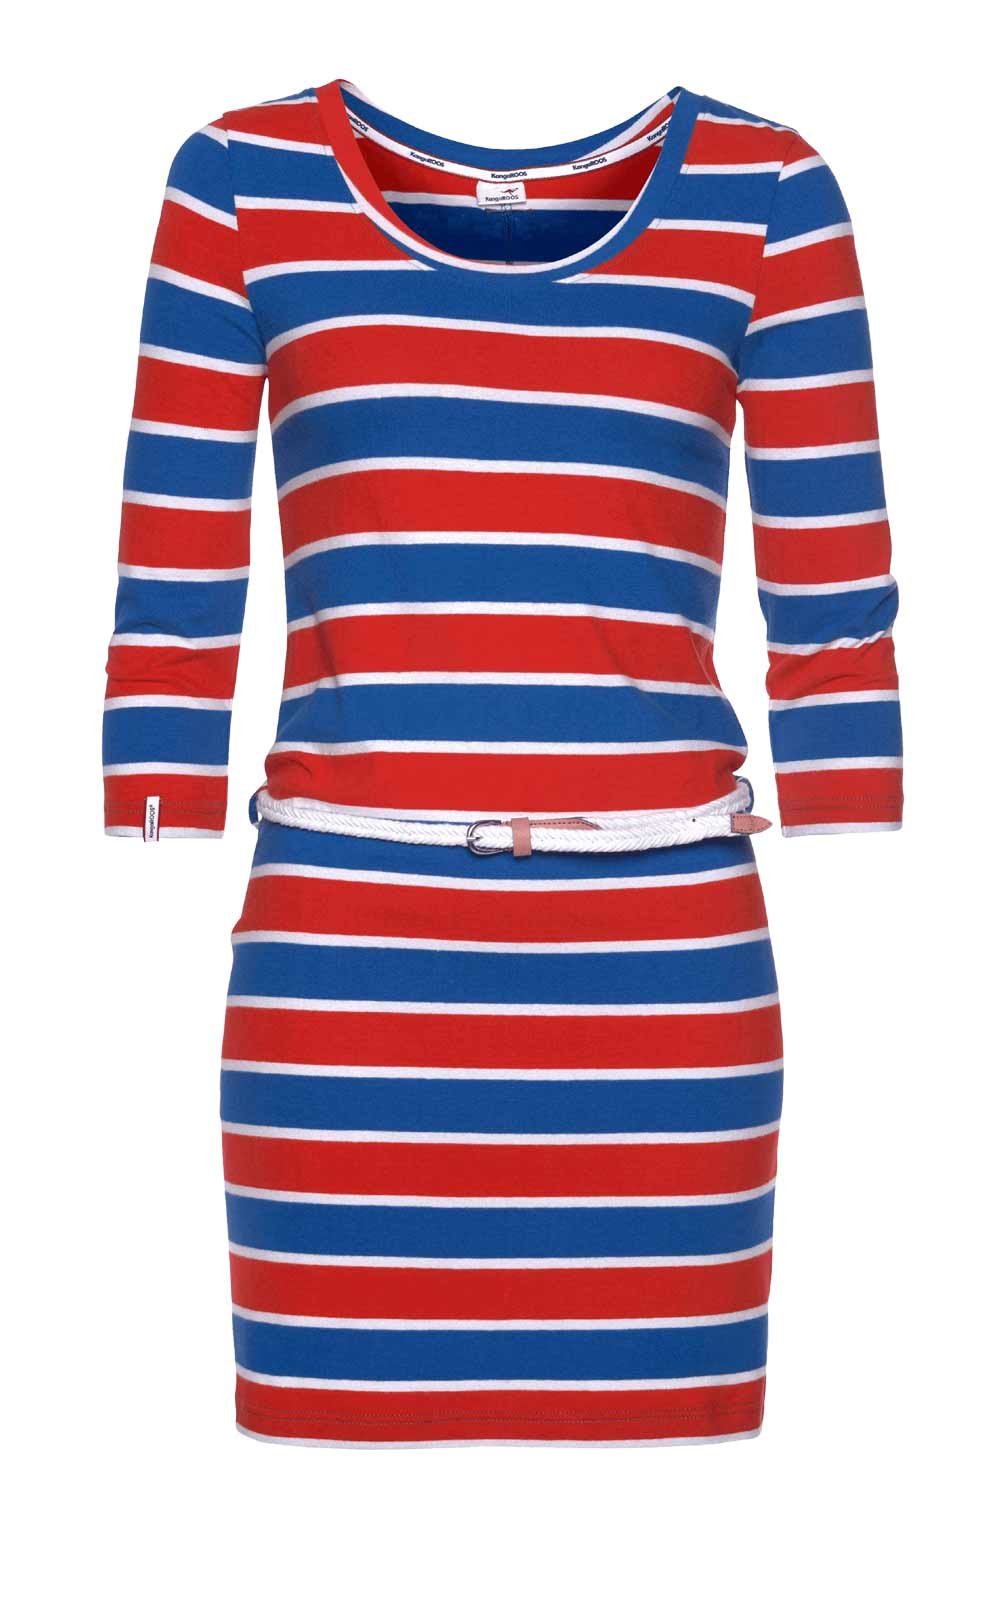 KANGAROOS Damen Marken-Jerseykleid mit Gürtel, blau-rot